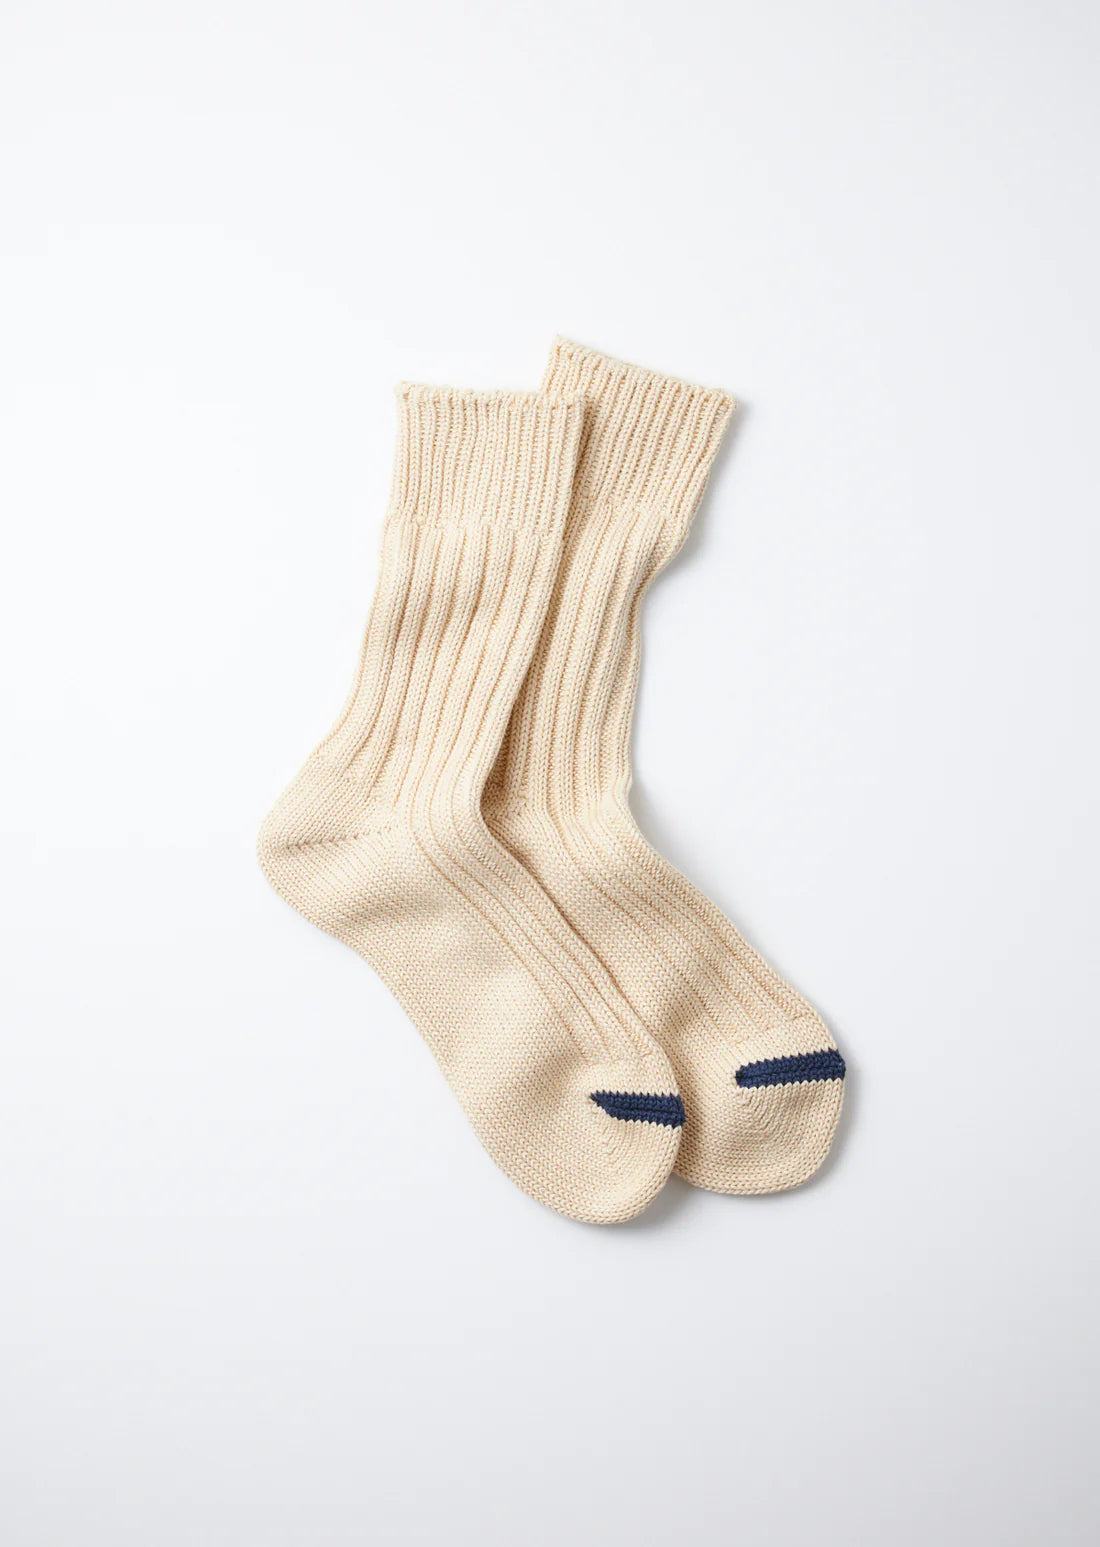 ROTOTO  城市  有機棉粗羅紋襪 9色  日本製